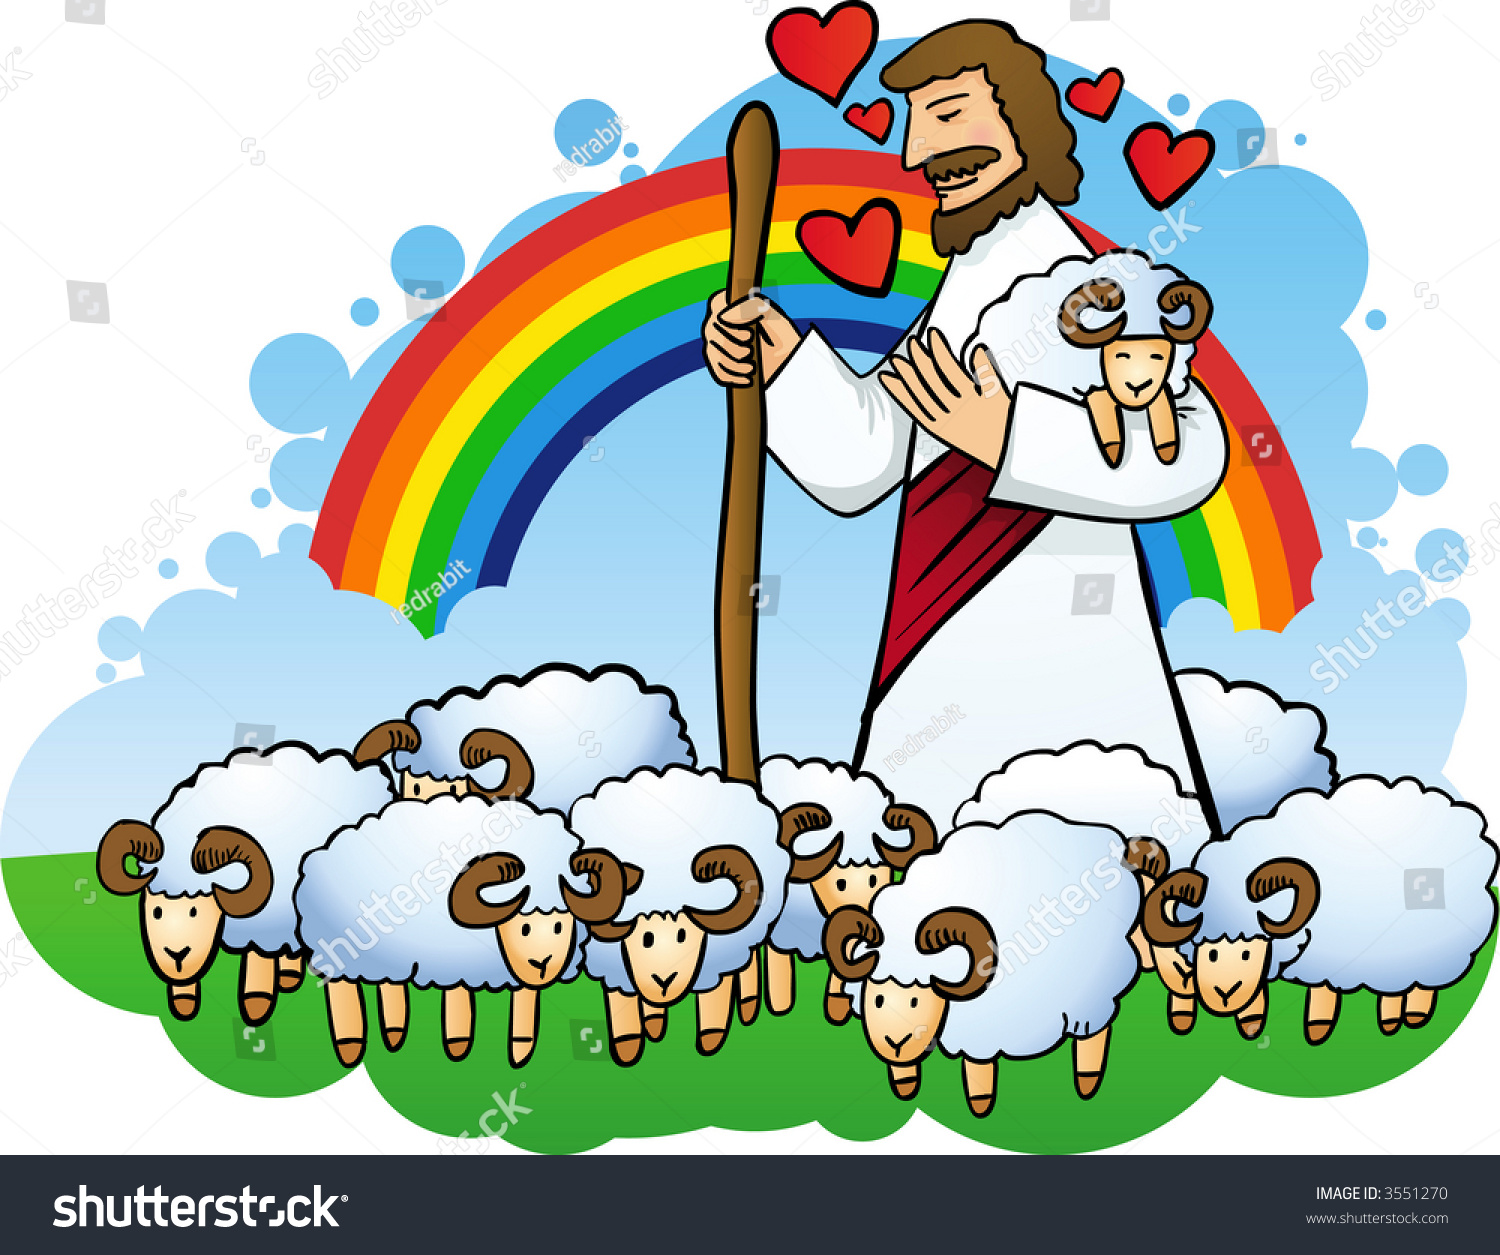 clipart jesus the good shepherd - photo #20